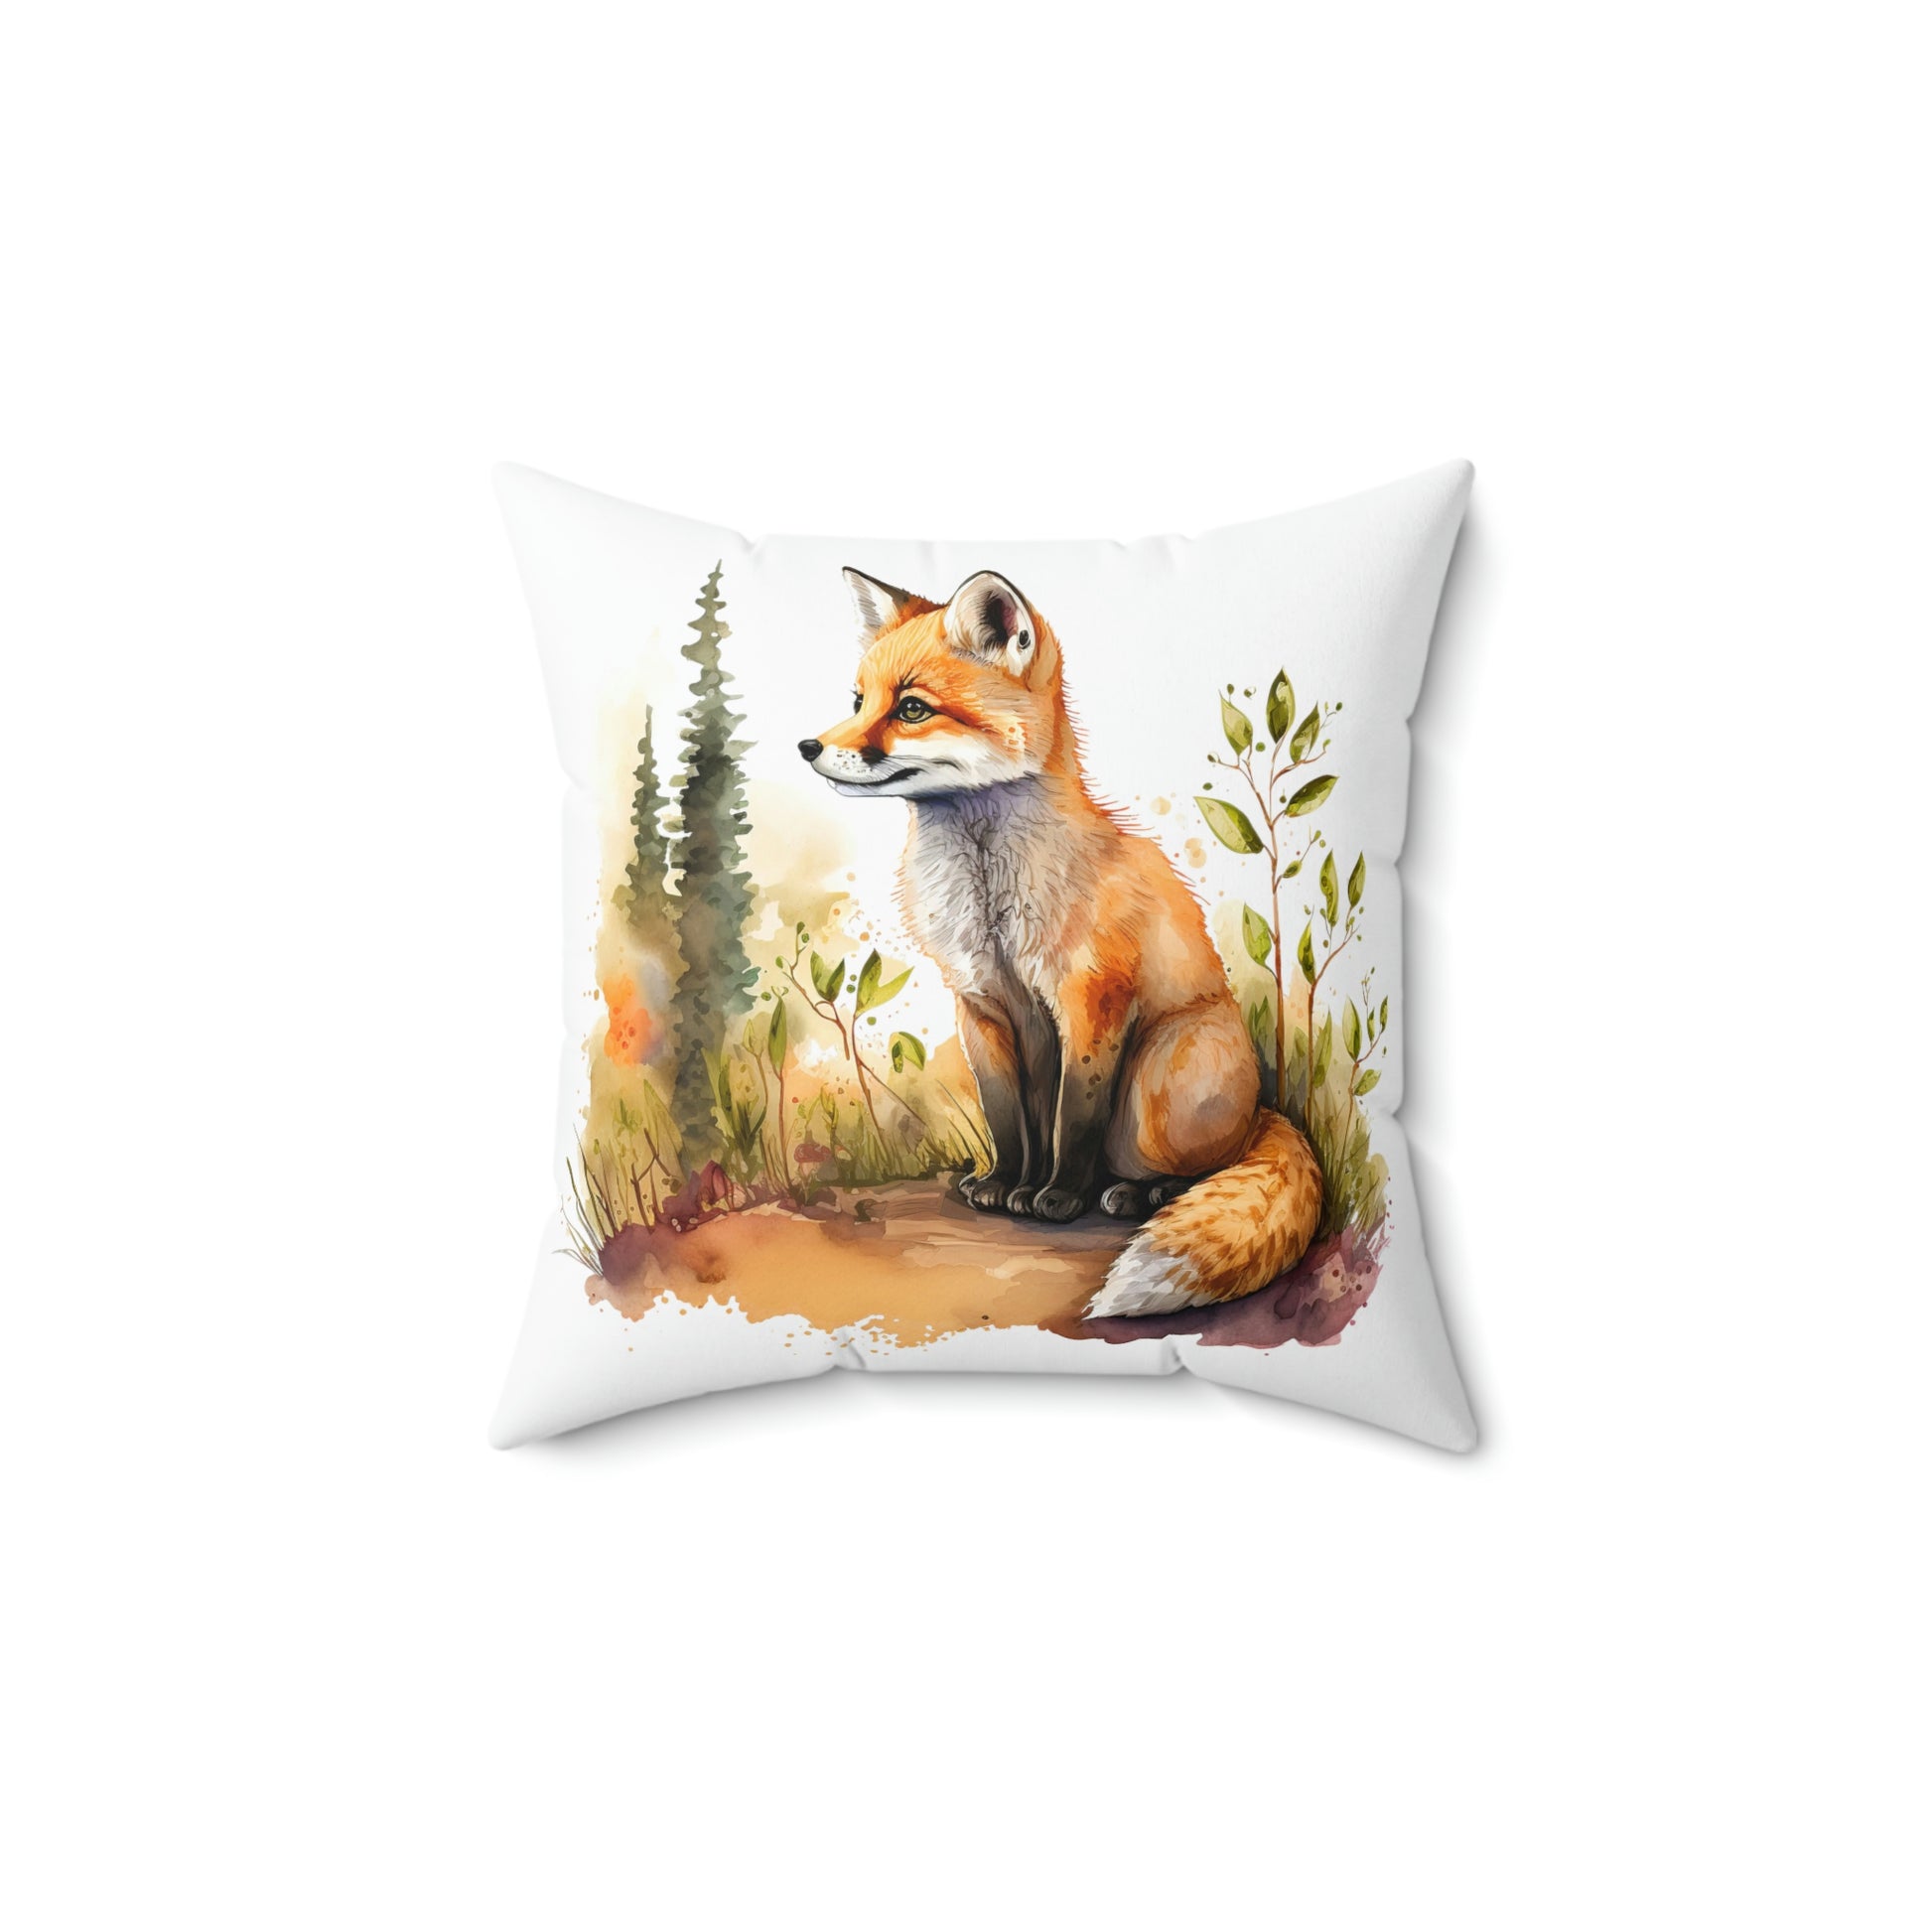 orange fox watercolor design on a square accent throw pillow, watercolor fox design on a throw pillow sitting on a couch, fox couch pillow accent for your living room decor